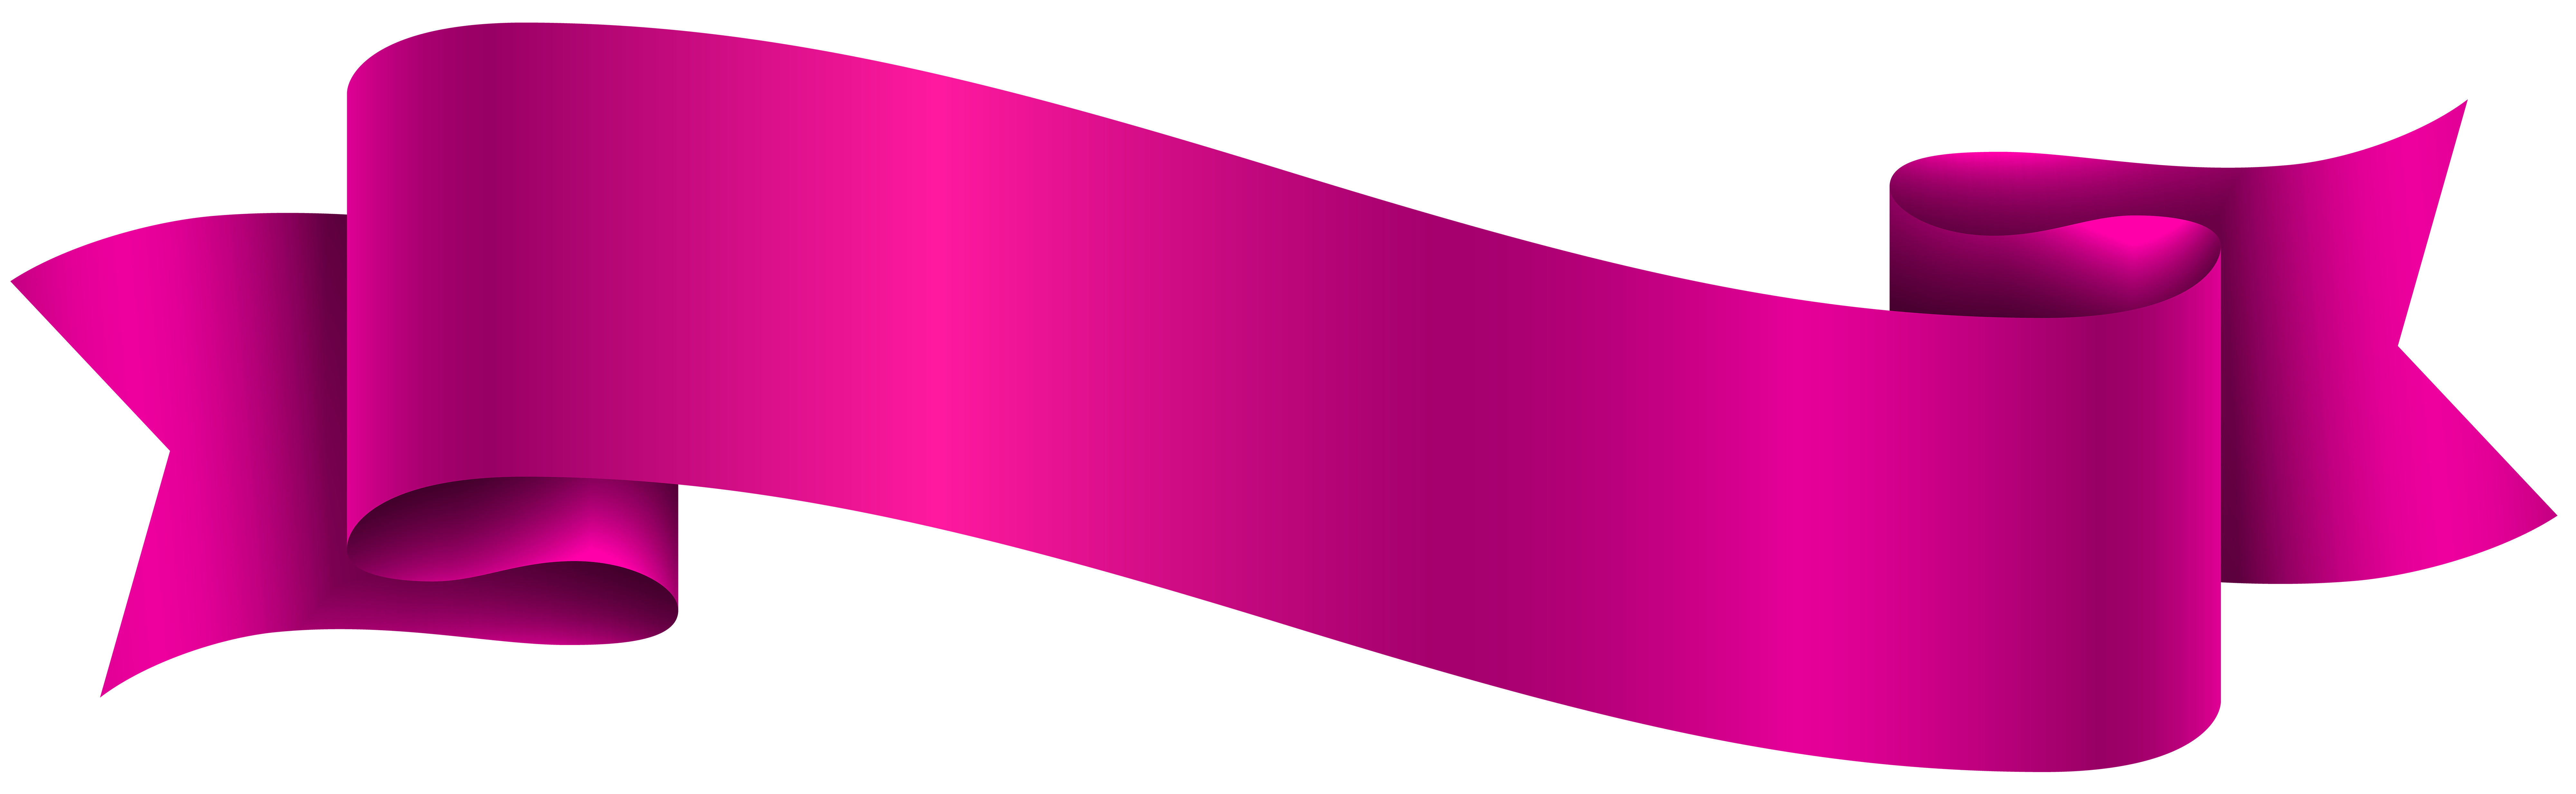 Product Design Ribbon Graphics - Pink Banner Transparent PNG Clip Art